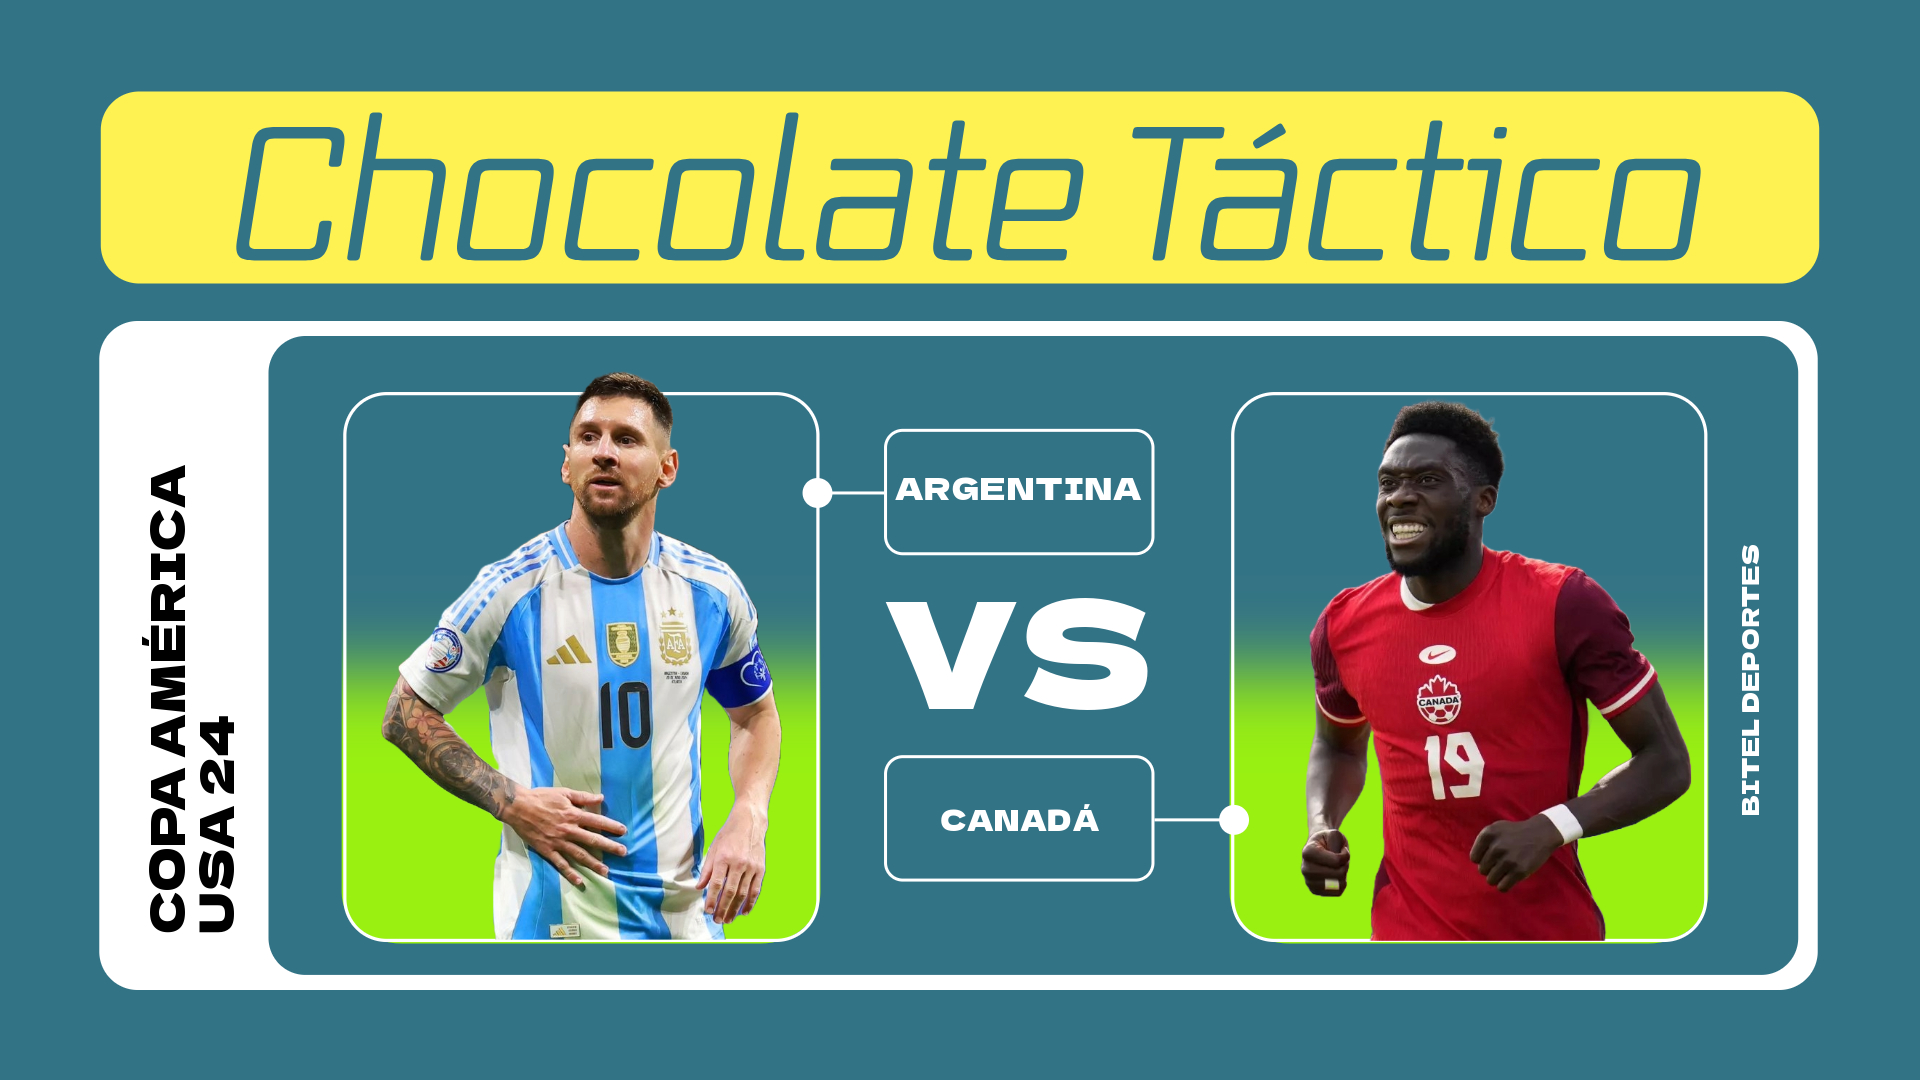 Chocolate táctico Semifinal Argentina vs Canada